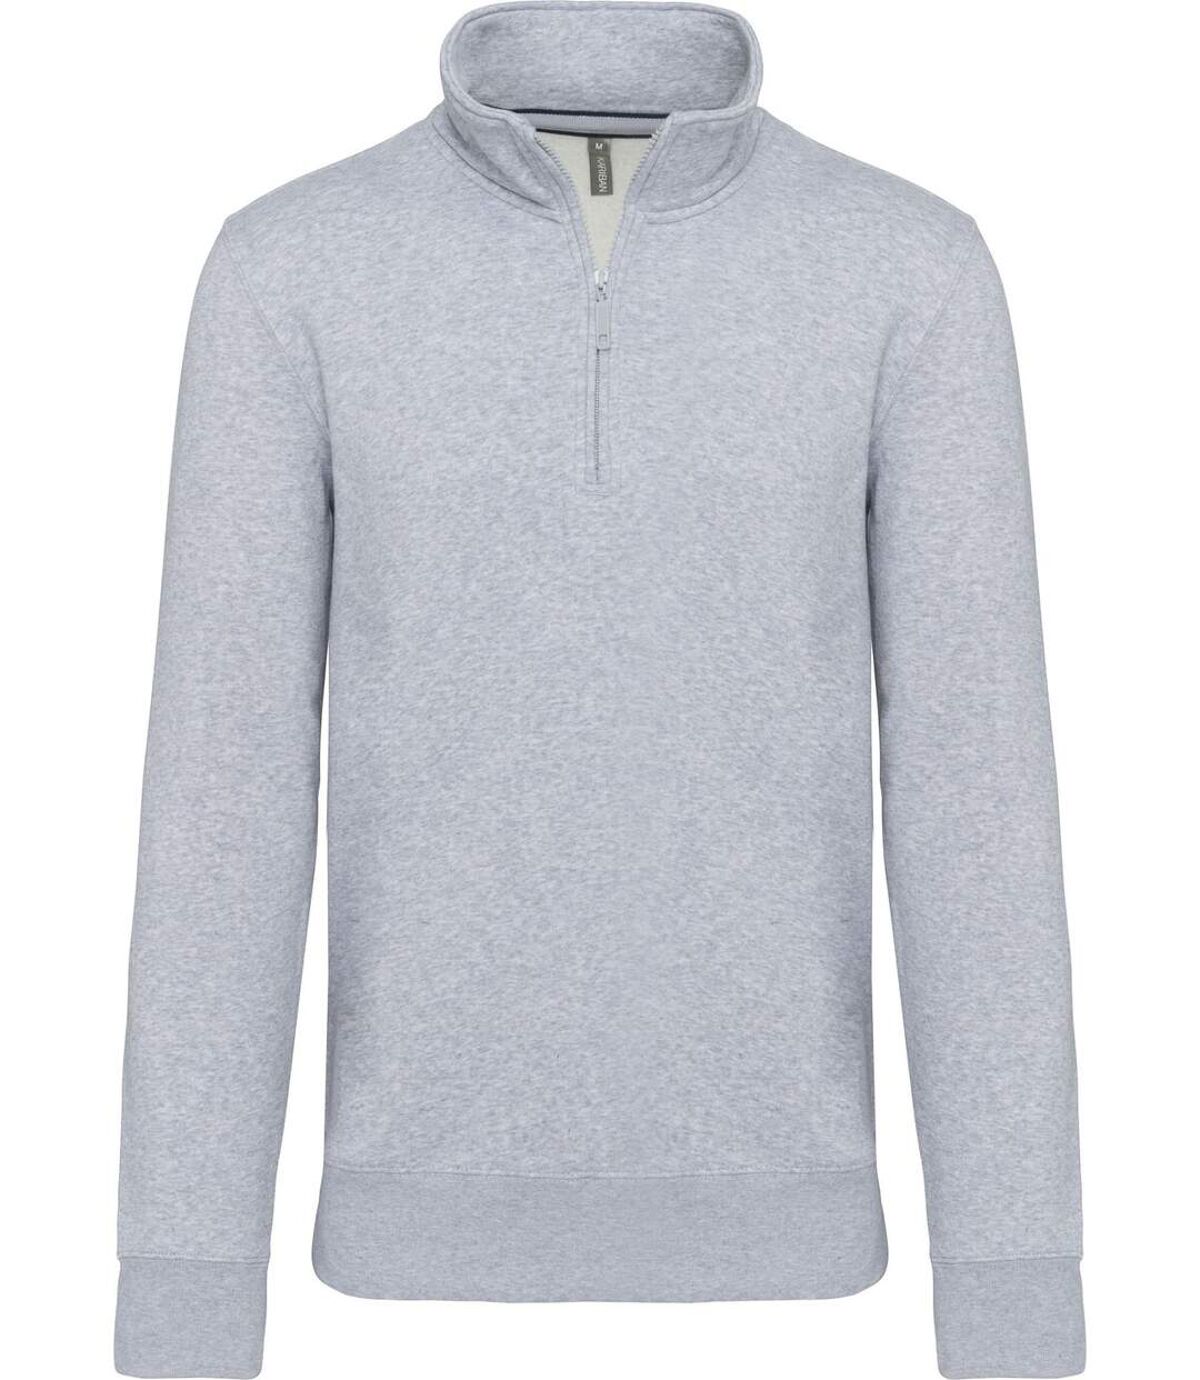 Sweat-shirt col zippé - K487 - gris chiné